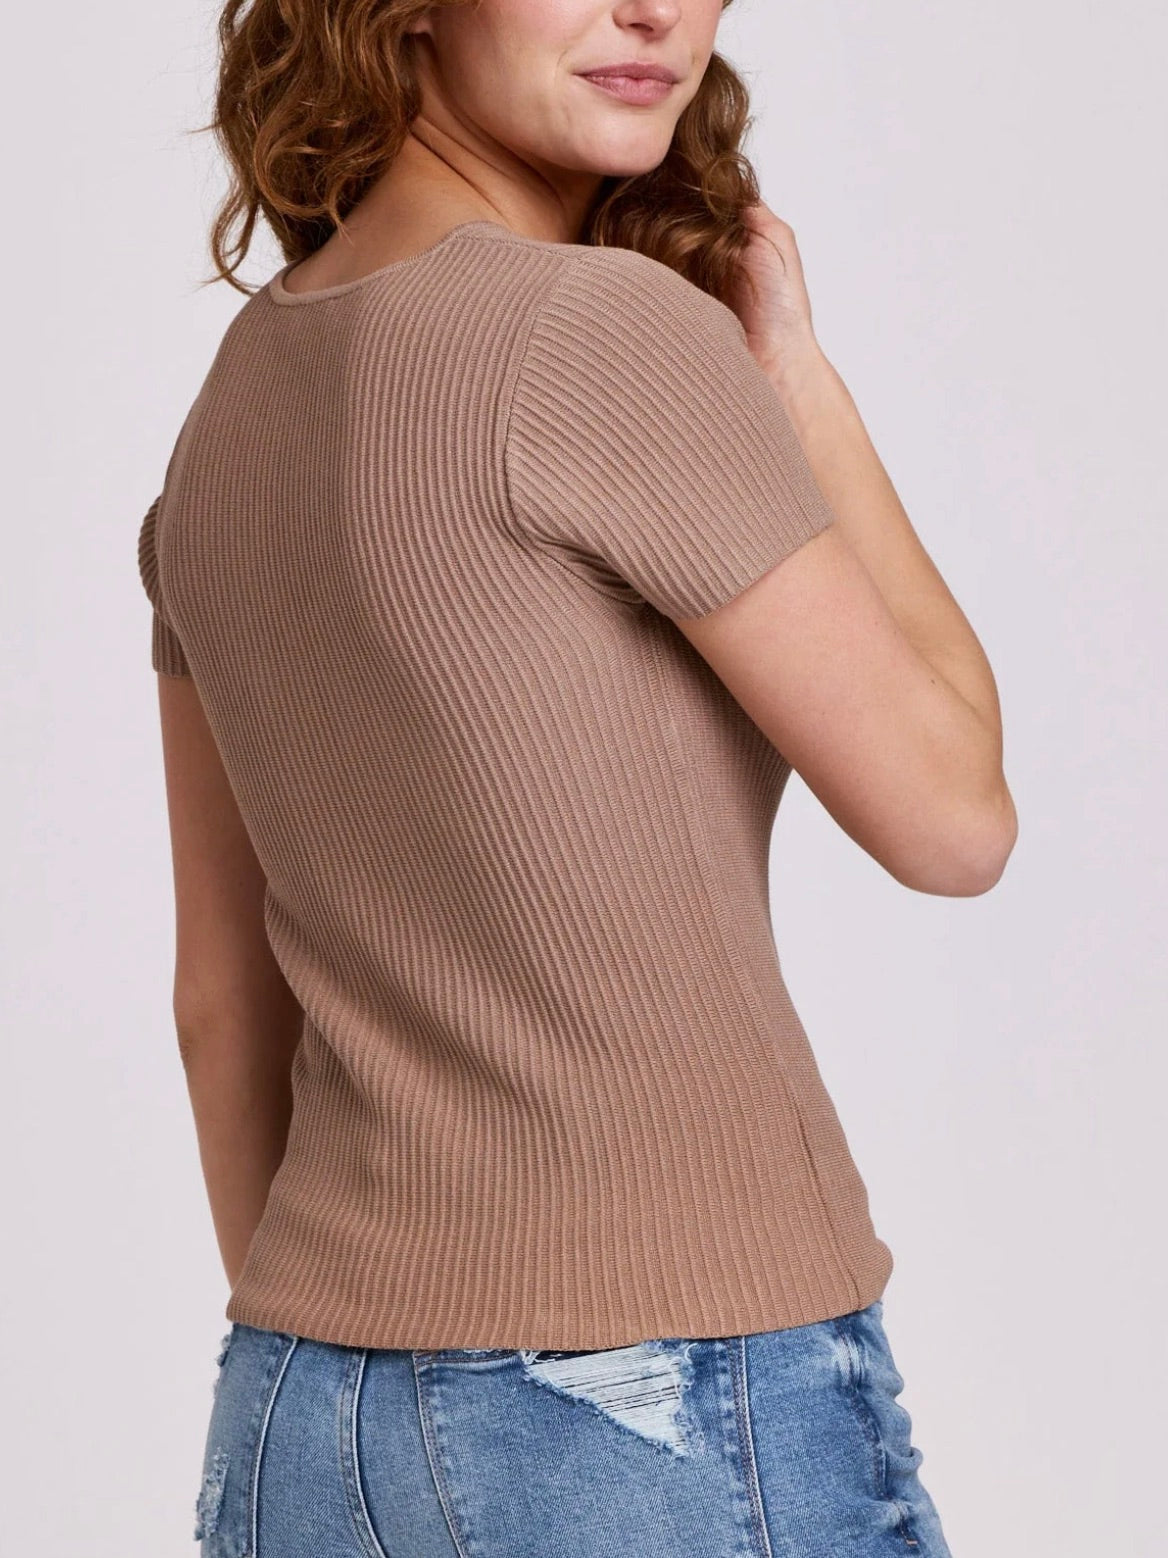 Lara Sweater Top